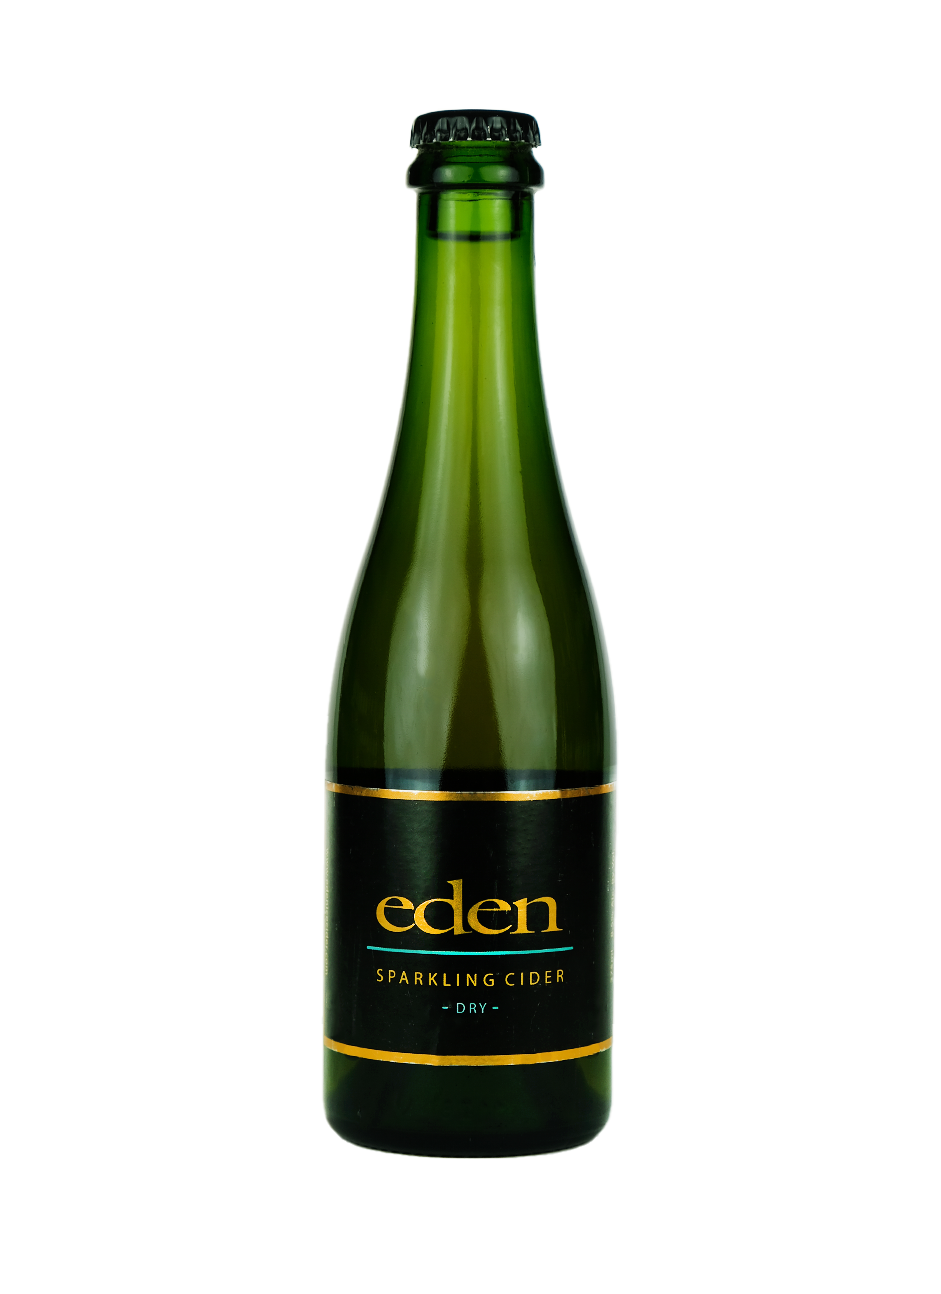 Eden Dry Sparkling Cider 375ml